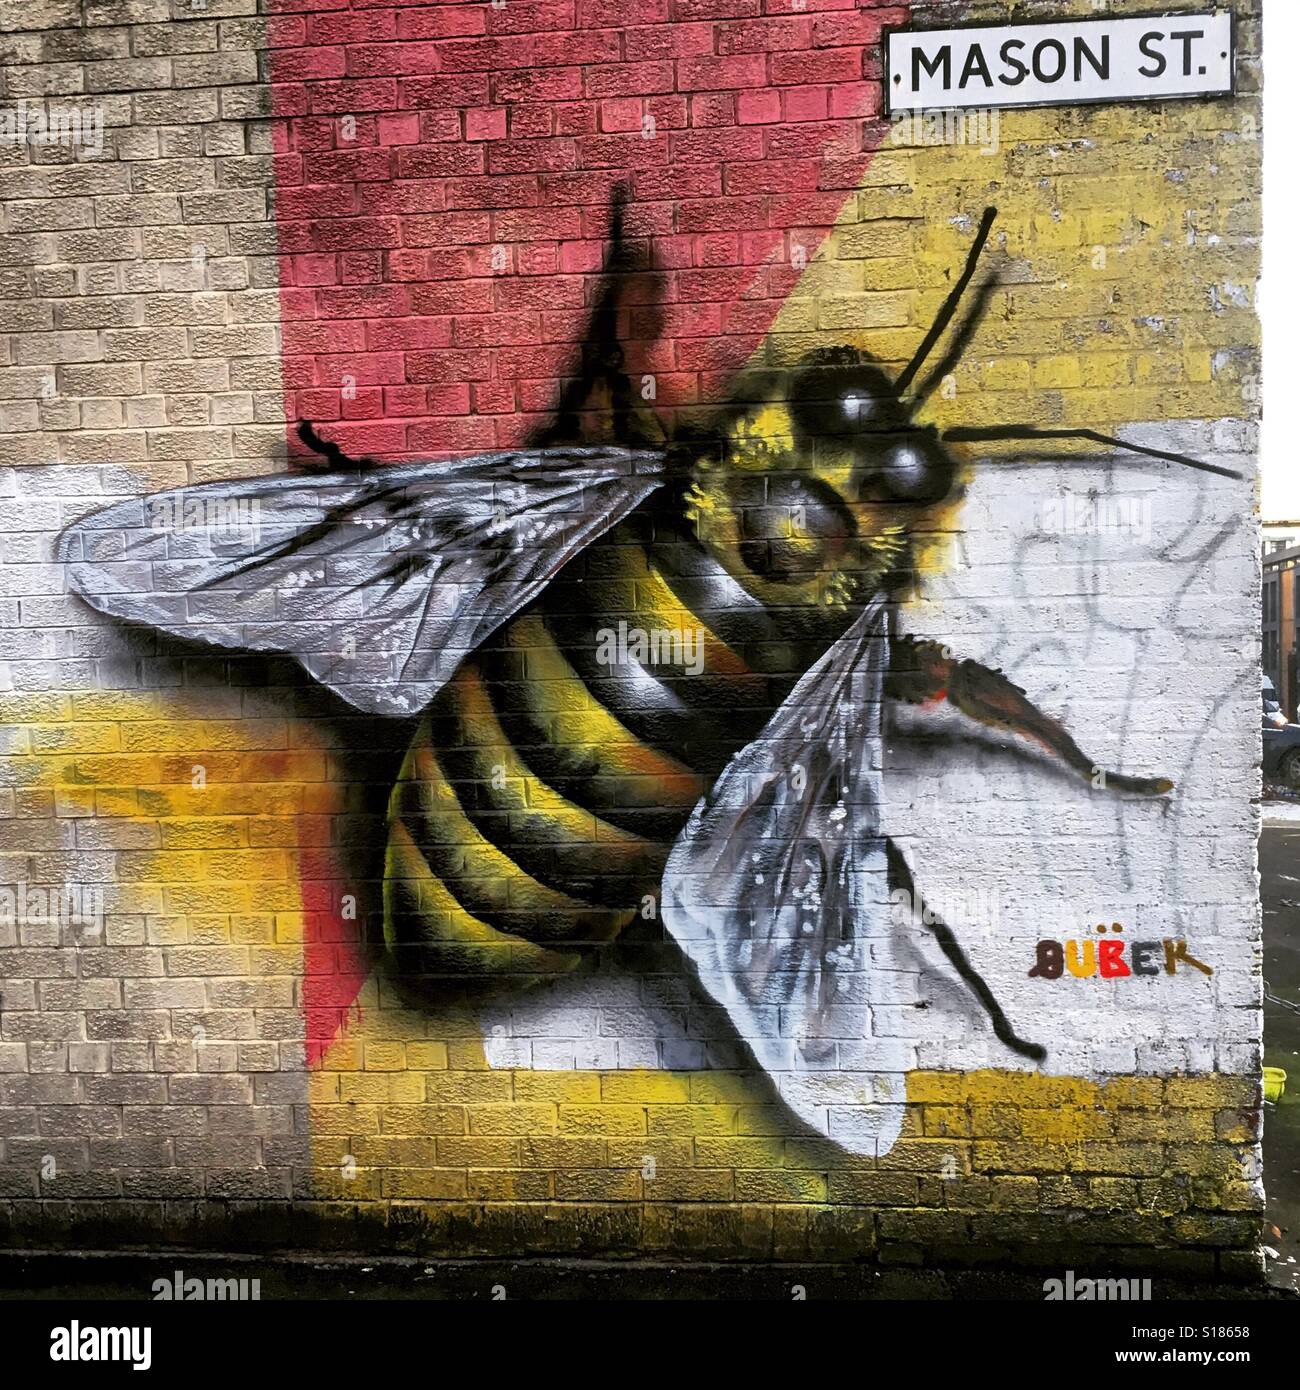 Bee graffiti art in Manchester, UK Stock Photo